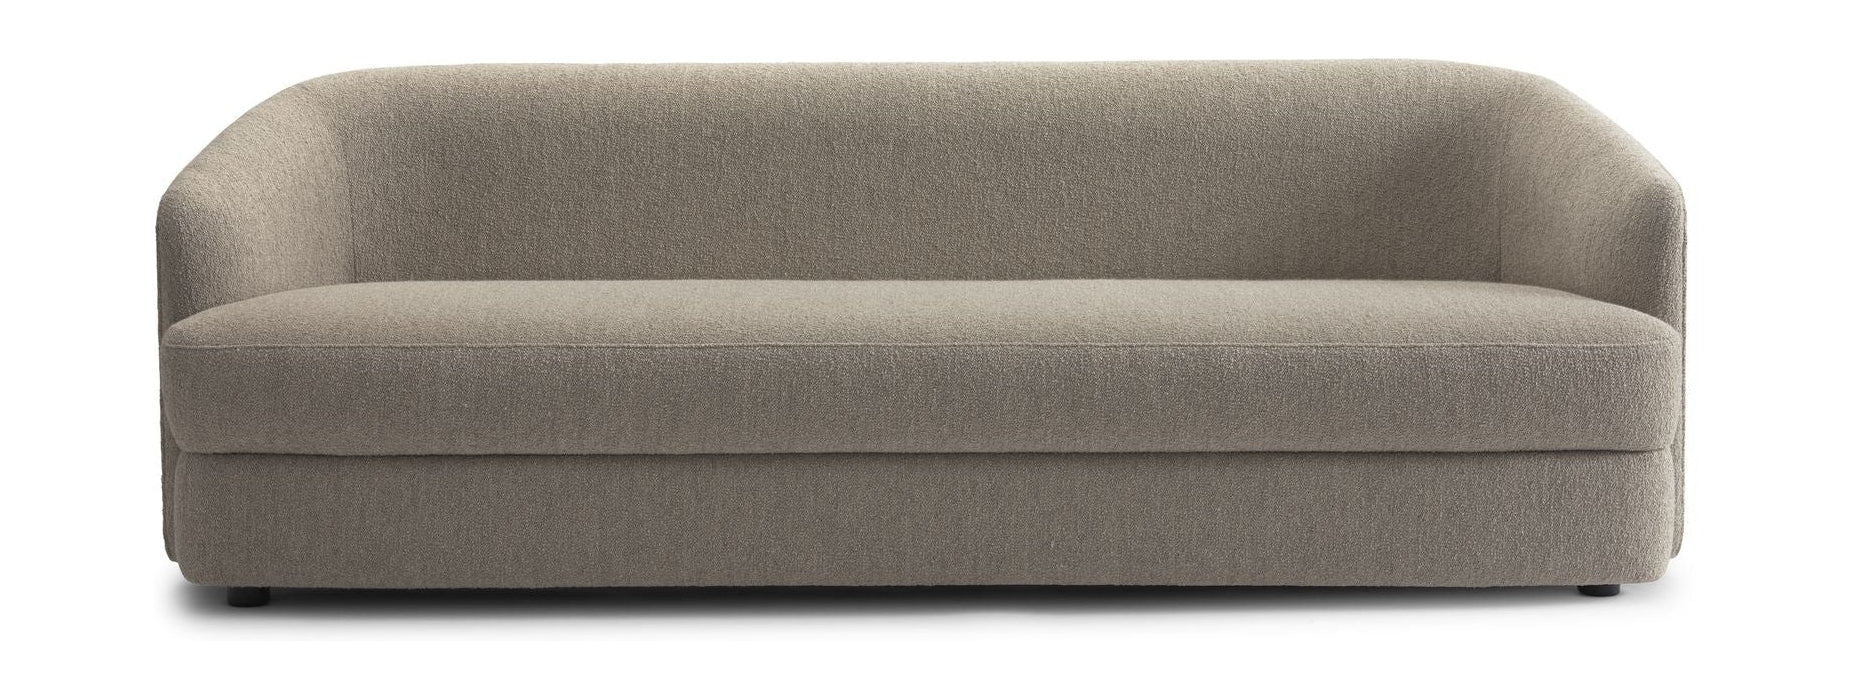 New Works covent sofa 3 sæder, hamp